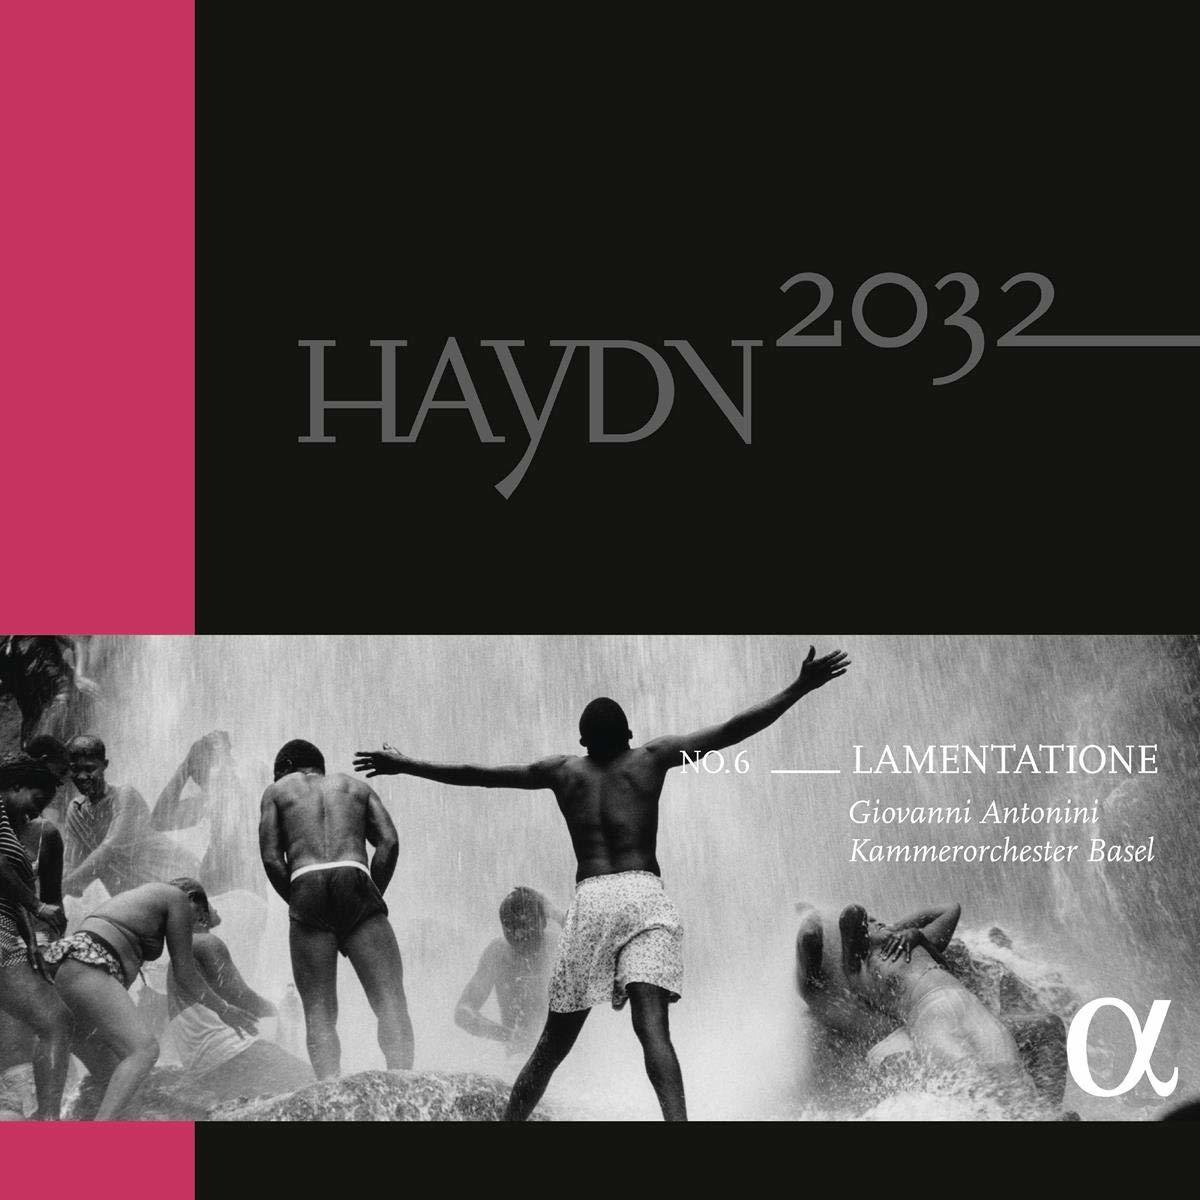 (Vinyl) Basel Giovanni Vol.6-Lamentatione - Kammerchor Haydn 2032 - Antonini,